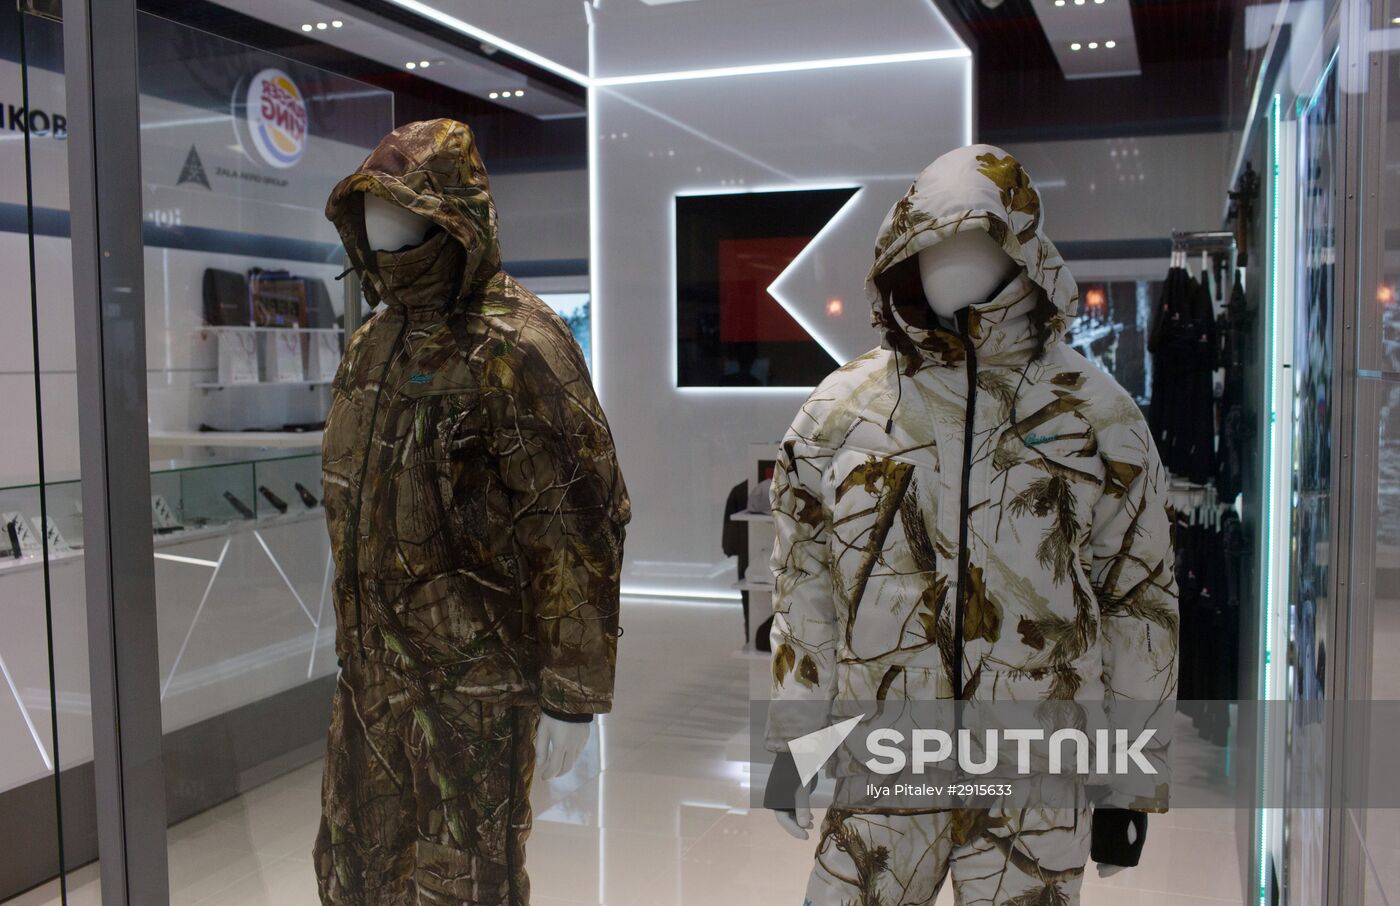 Concern Kalashnikov opens its store at Sheremetevo Airport